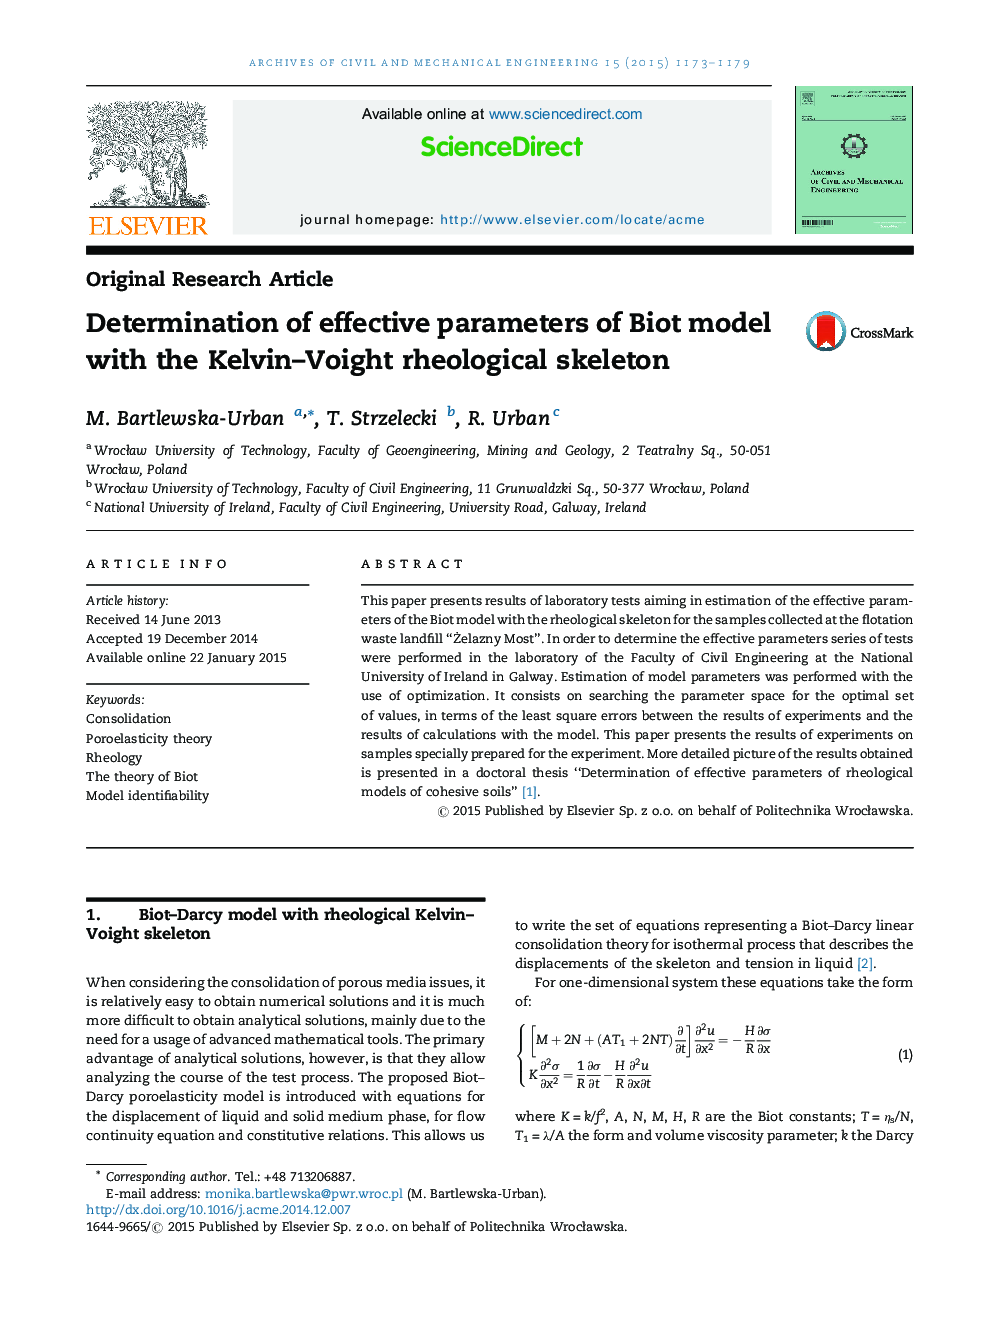 Determination of effective parameters of Biot model with the Kelvin–Voight rheological skeleton